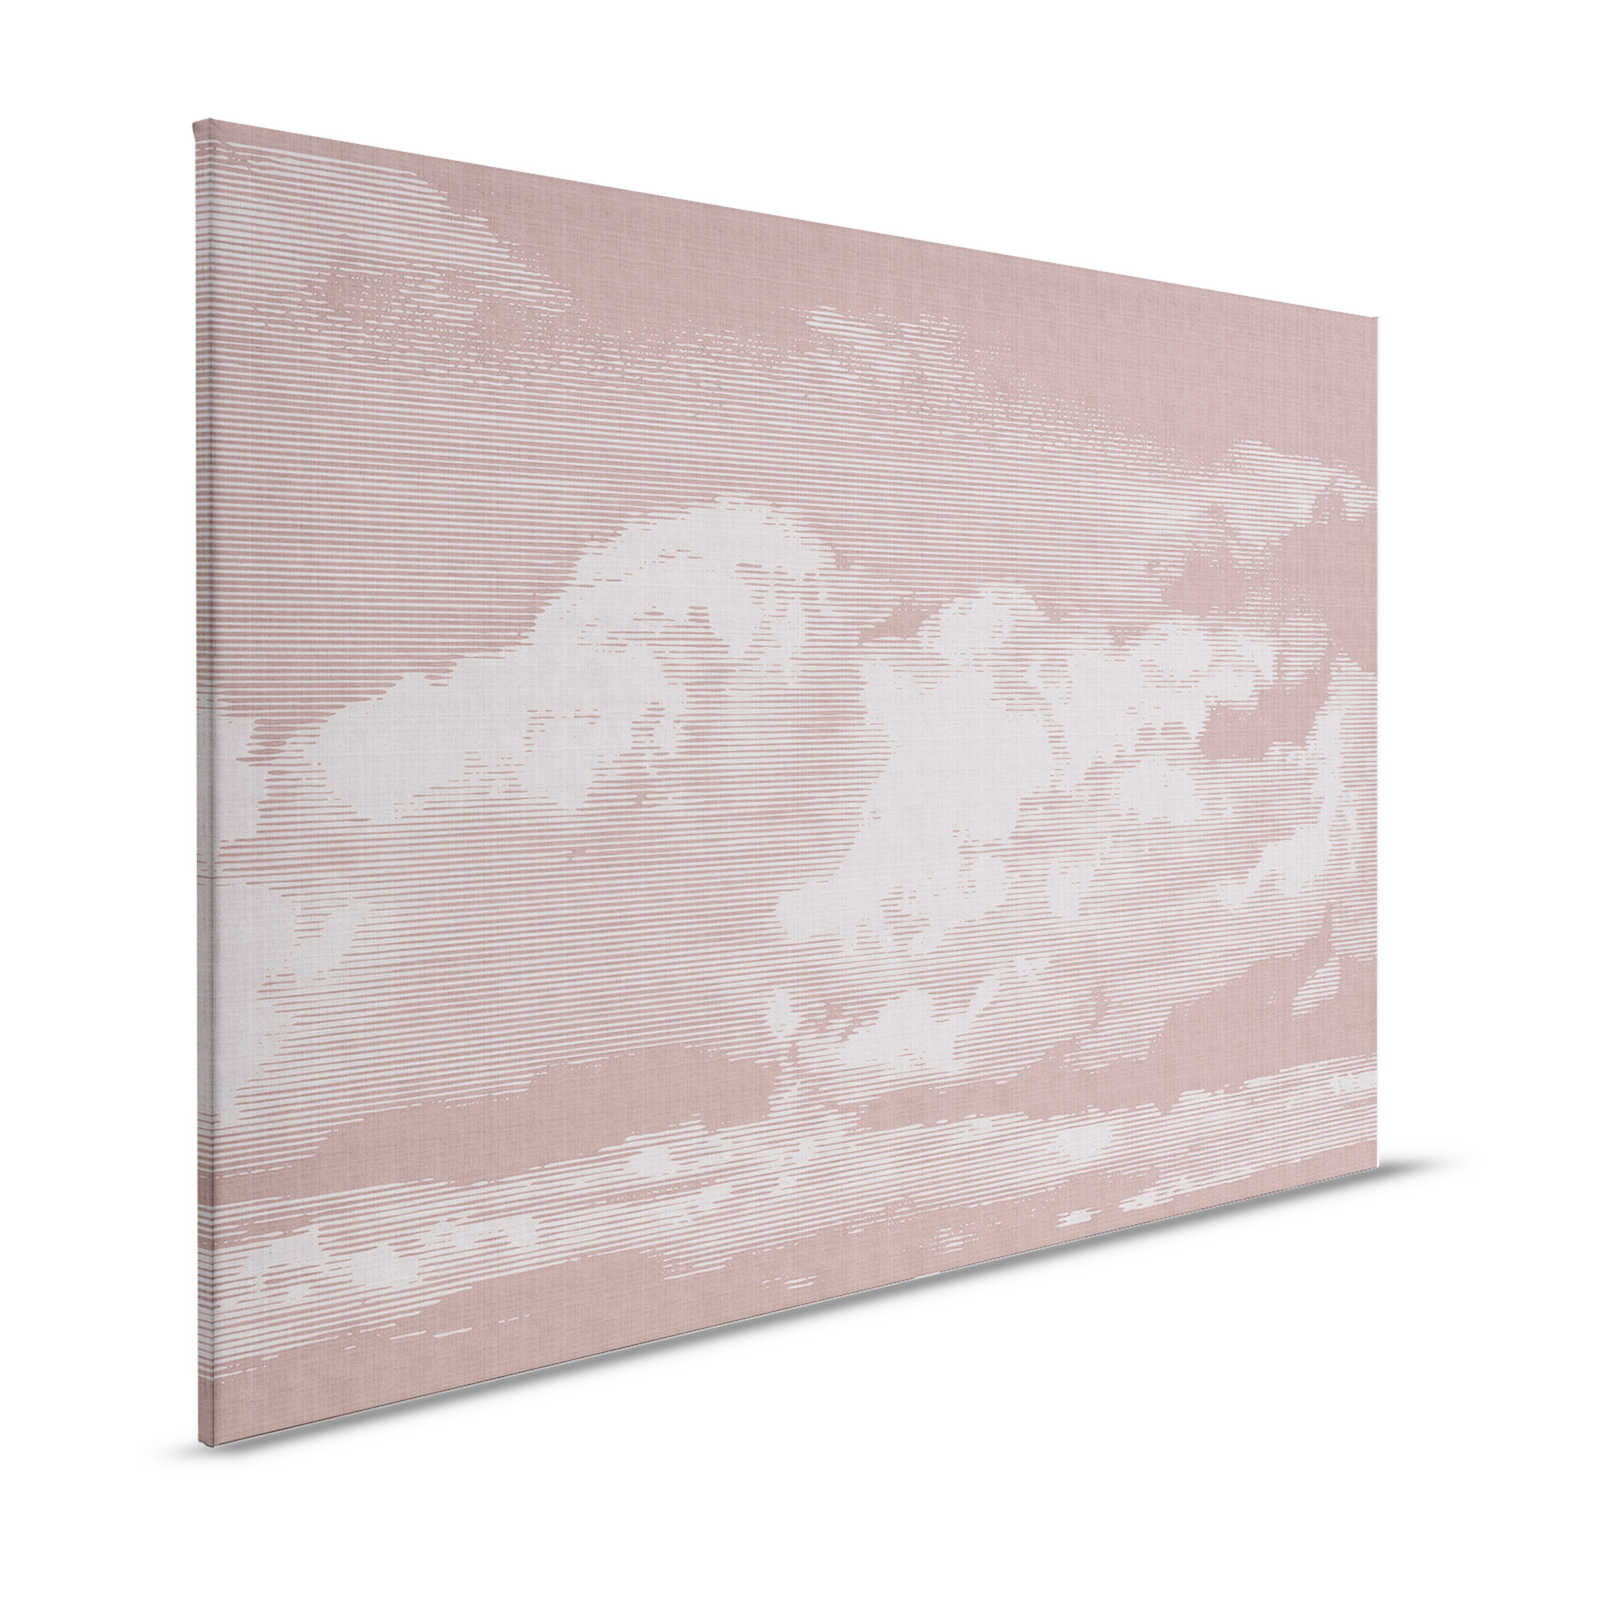 Nubes 3 - Cuadro lienzo celestial con motivo de nubes - Aspecto lino natural - 1,20 m x 0,80 m
